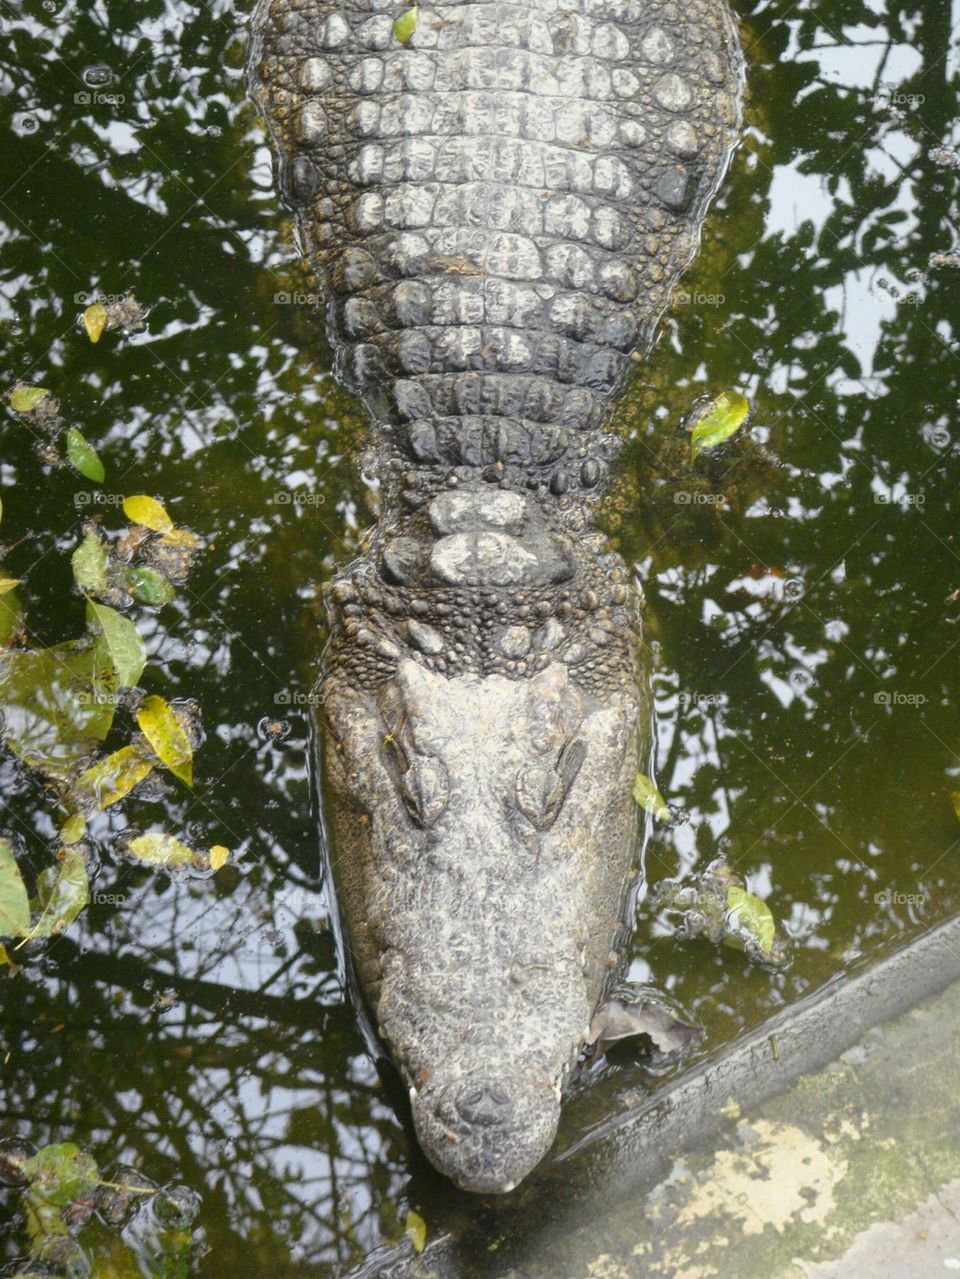 Thai Crocodile 